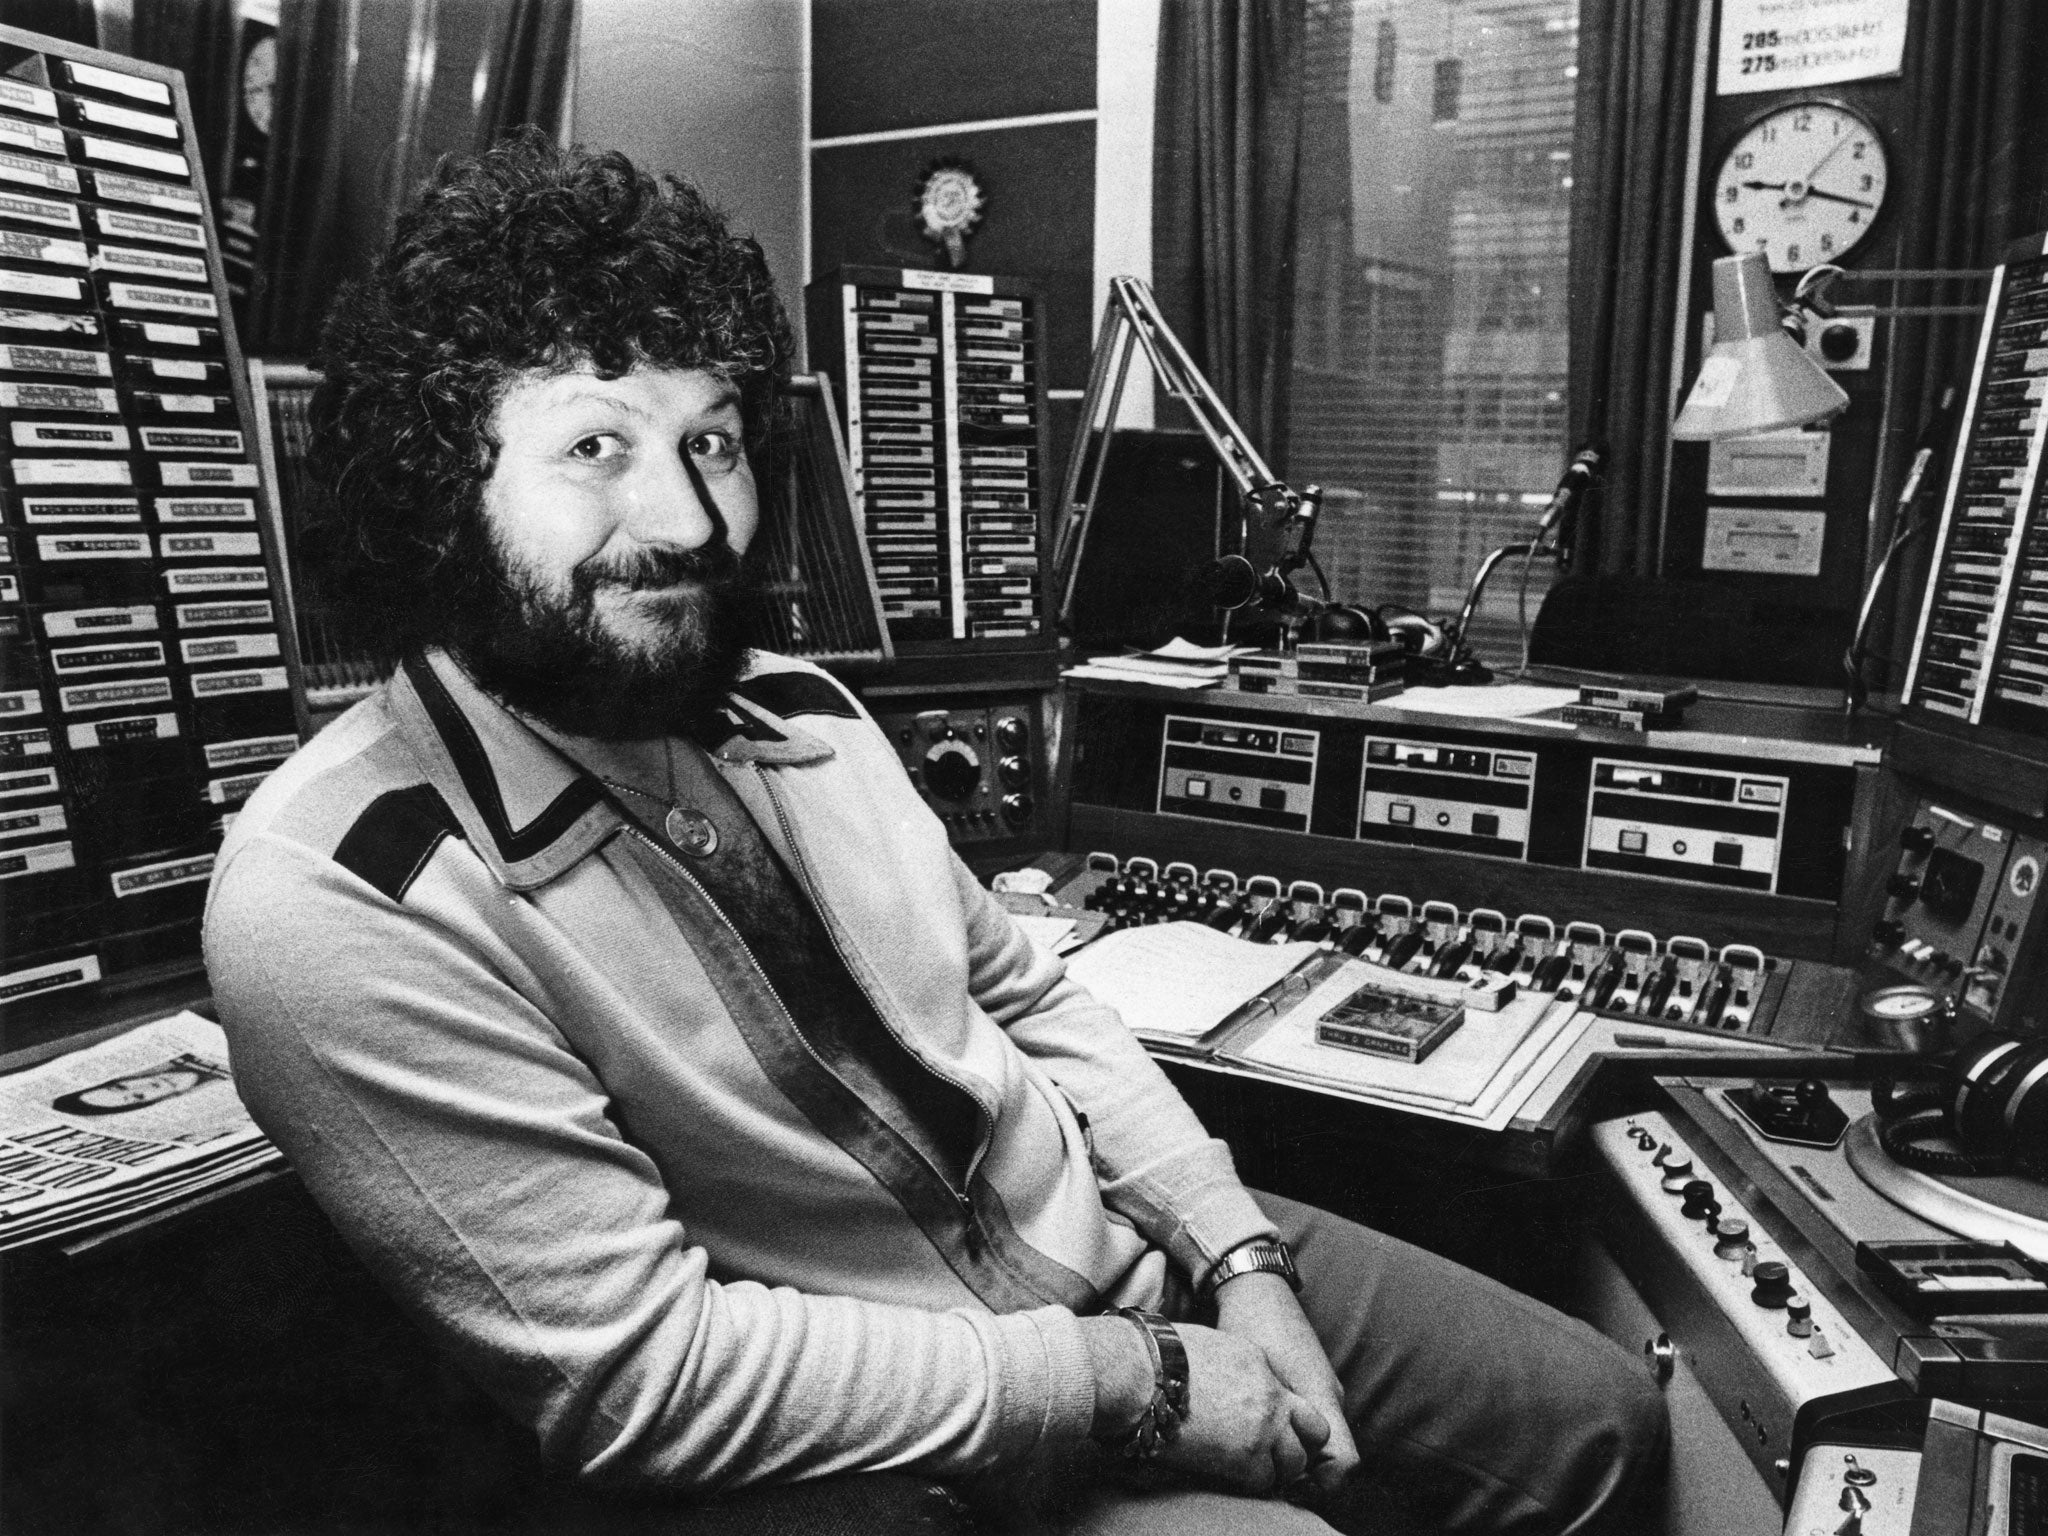 BBC Radio 1 presenter Dave Lee Travis in his studio at Broadcasting House, London, 14 January 1980.